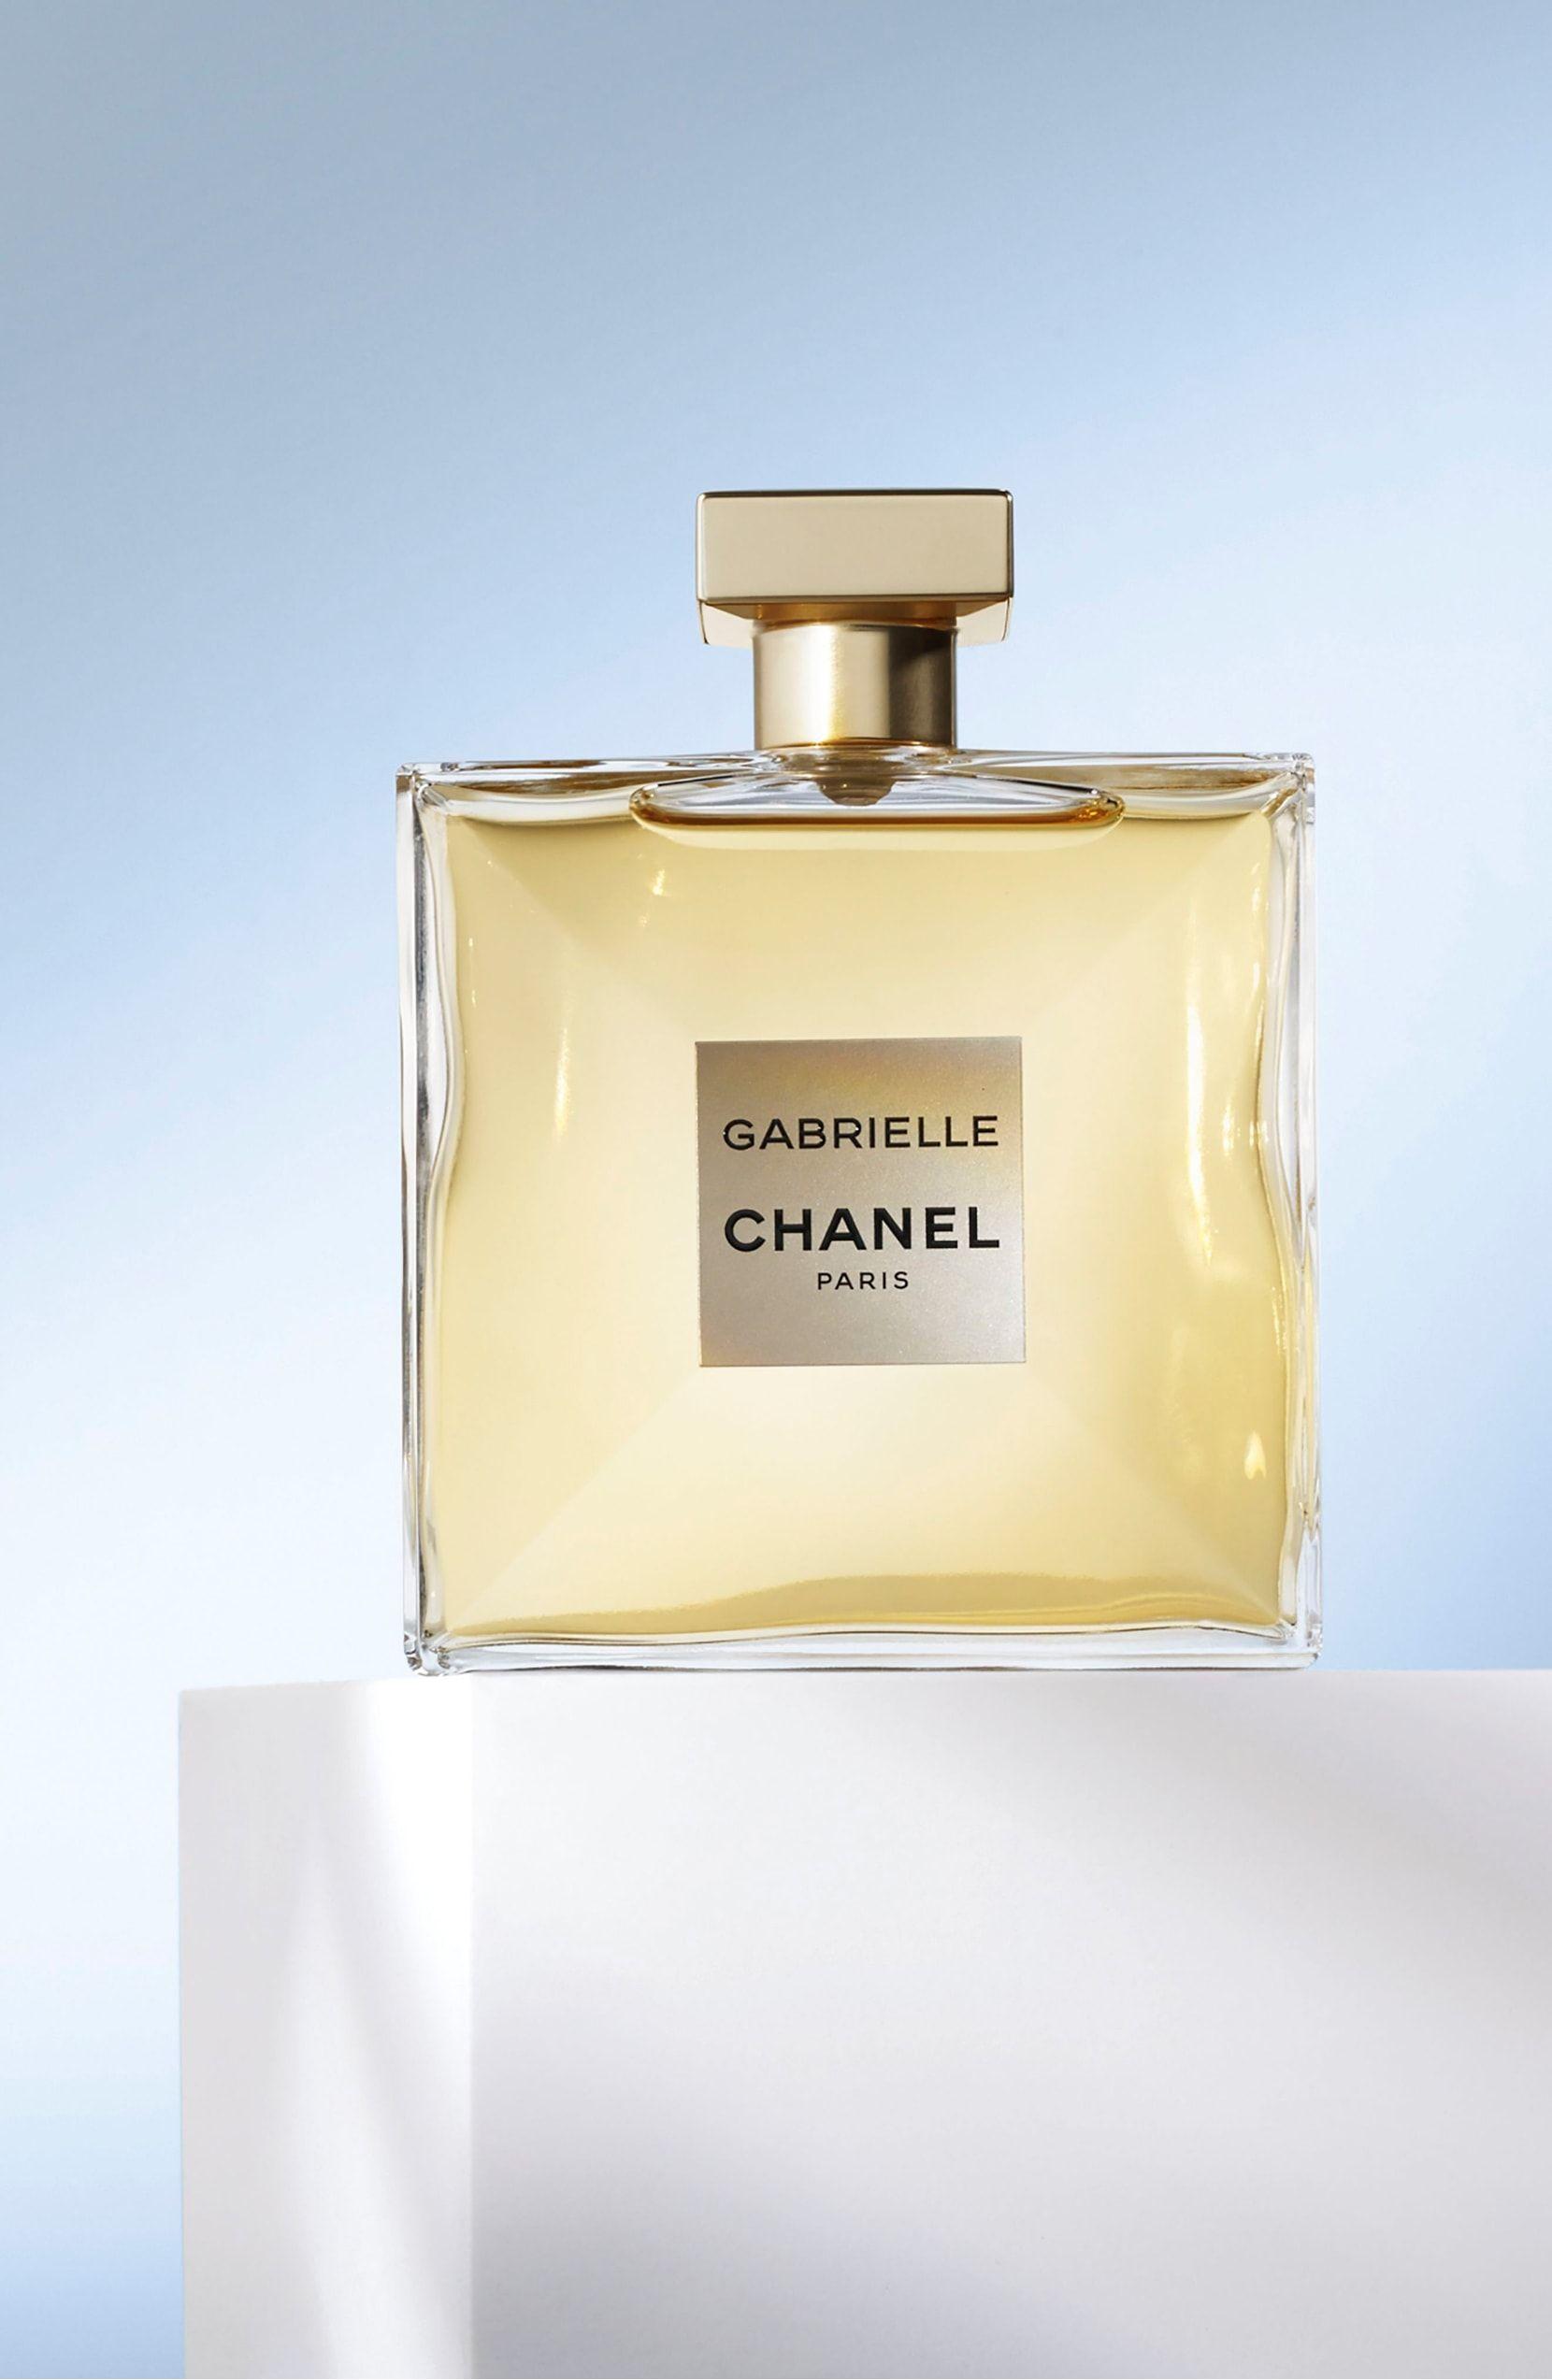 Gabrielle Chanel Paris Logo - CHANEL GABRIELLE CHANEL Eau de Parfum Spray